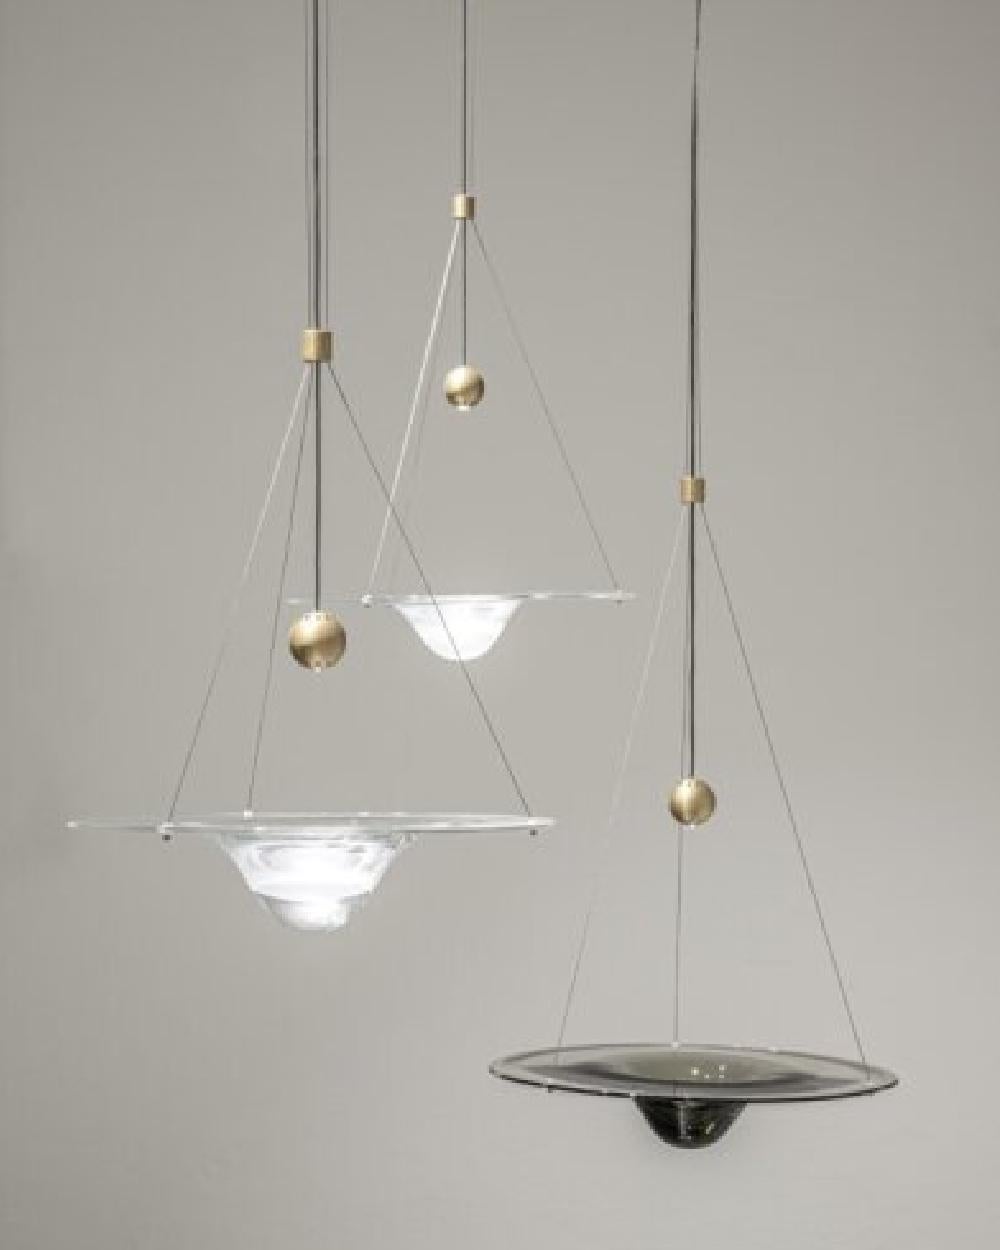 MOMENTO MMT35 Pendant lamp by Nao Tamura for Wonderglass For Sale 2